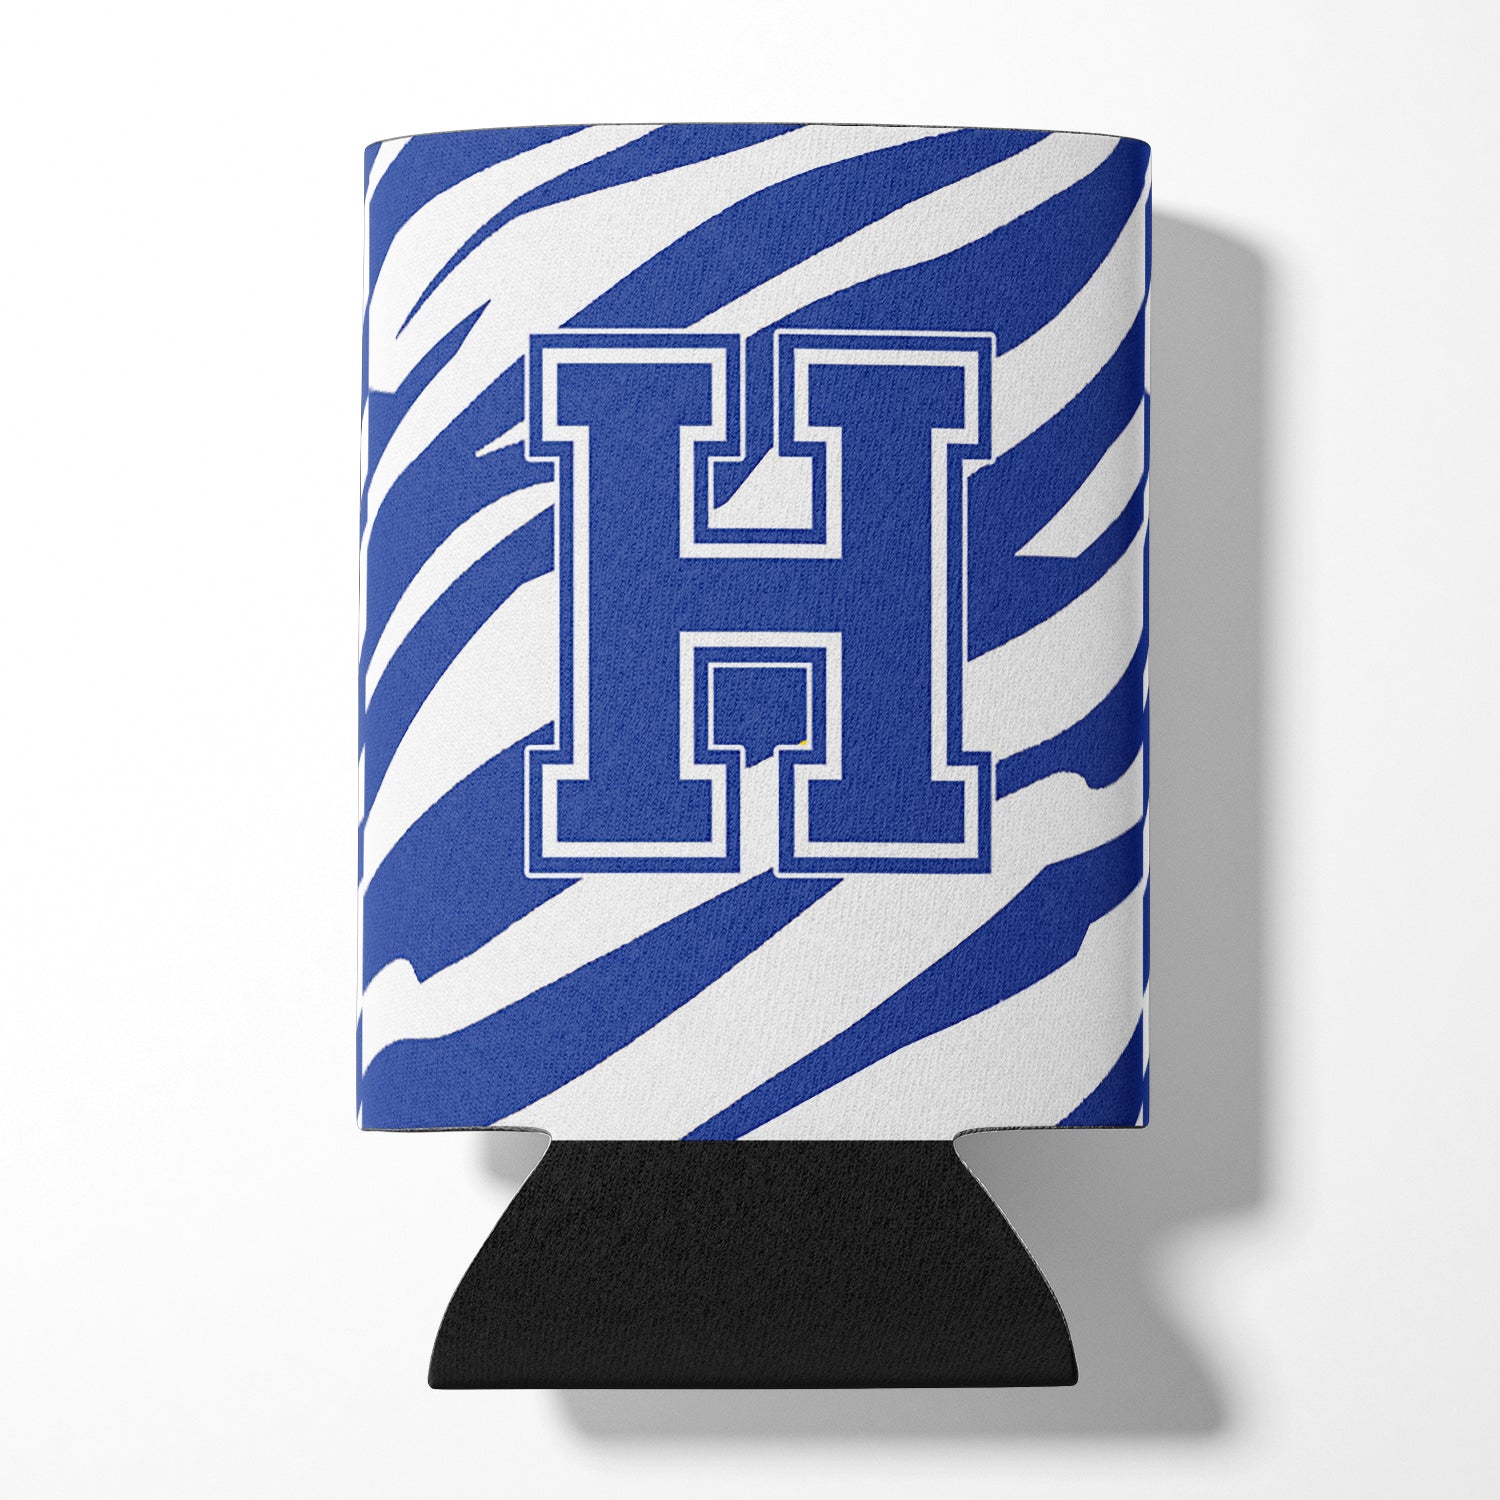 Monogramme initial de la lettre H - Tiger Stripe Blue and White Can Beverage Insulator Hugger